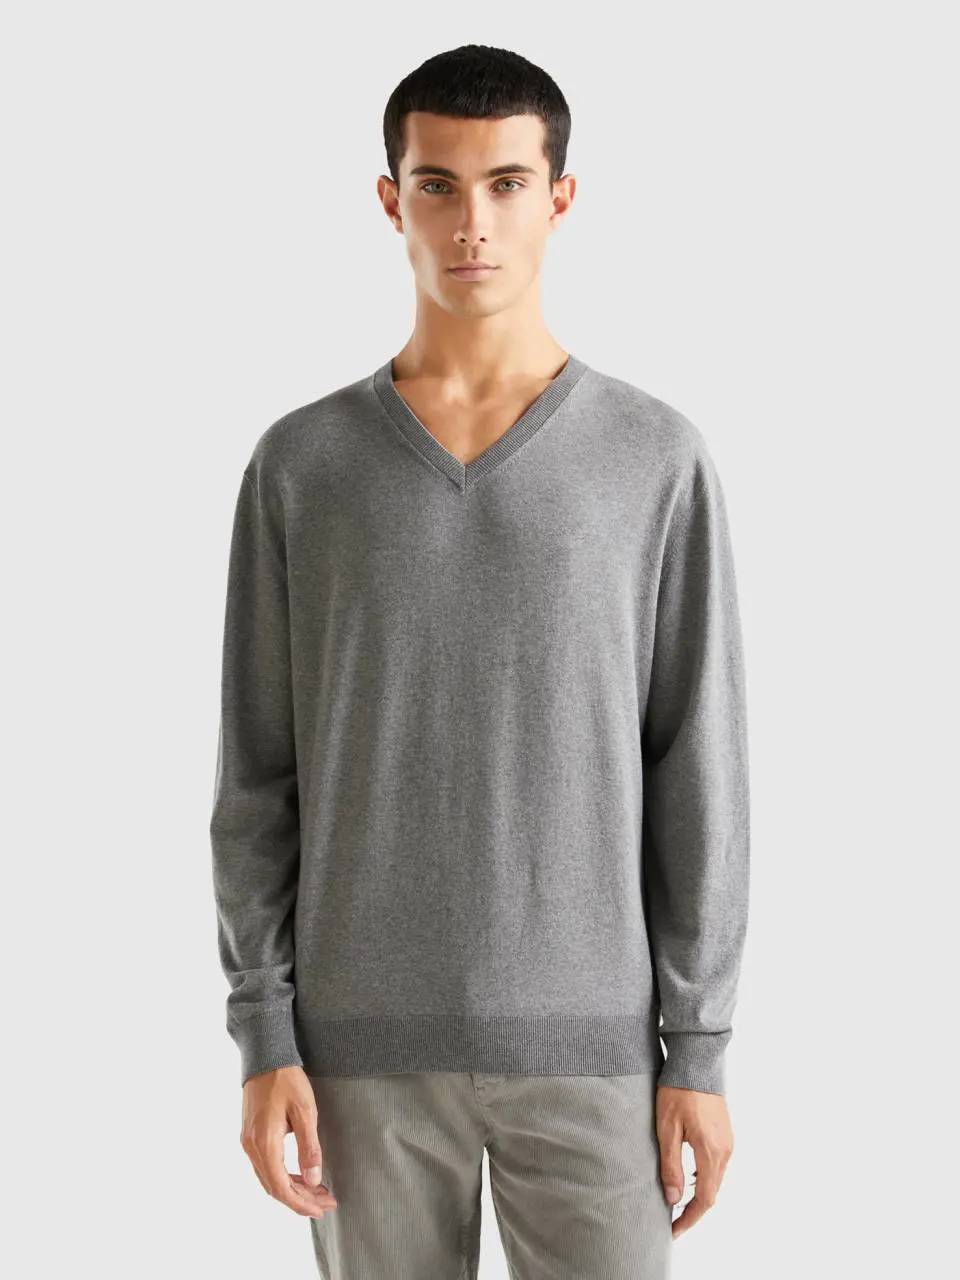 Benetton v-neck sweater in lightweight cotton blend. 1